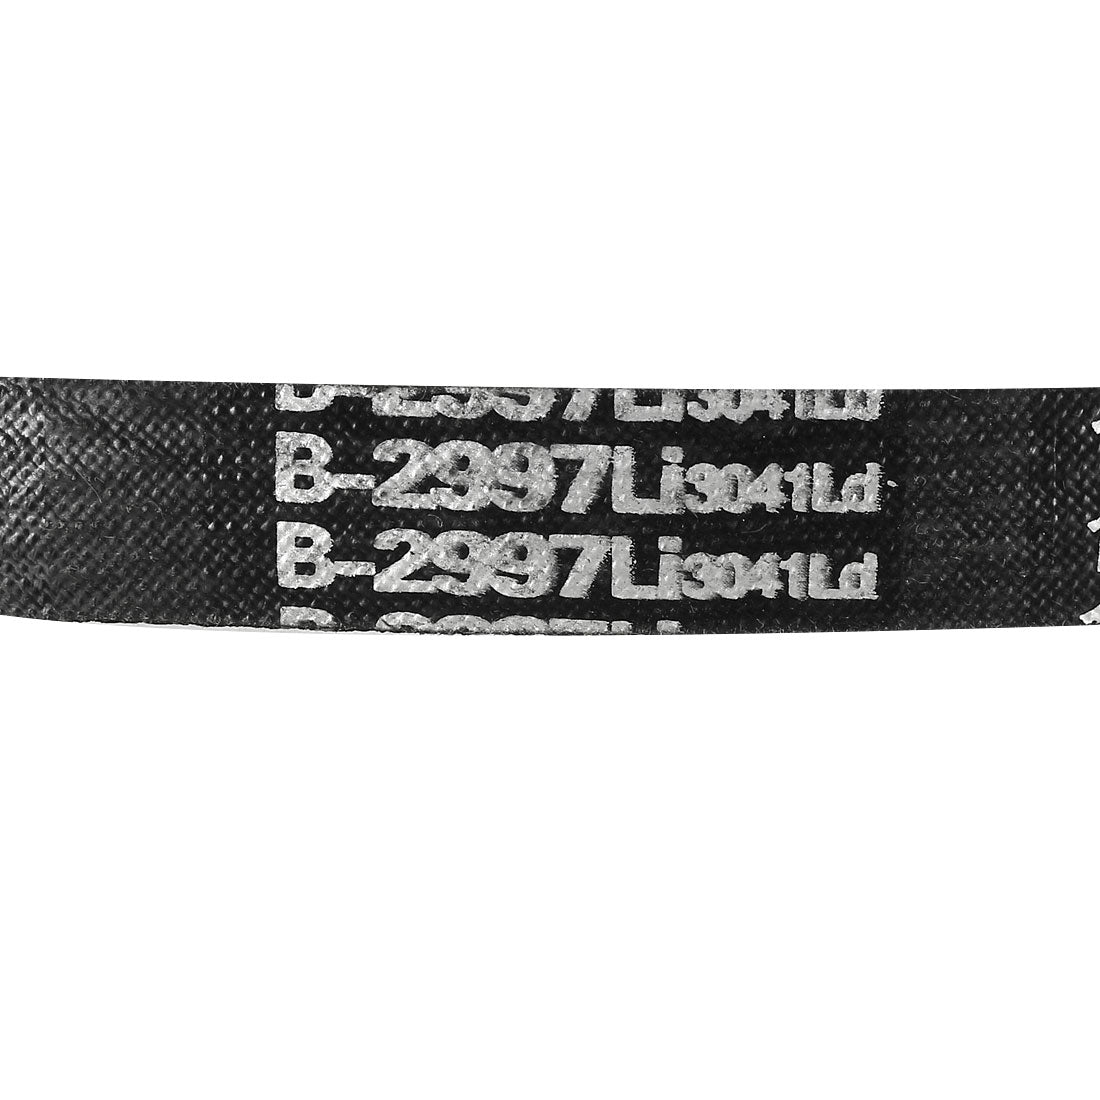 uxcell Uxcell B-2997/B118 Drive V-Belt Inner Girth 118" Industrial Rubber Transmission Belt